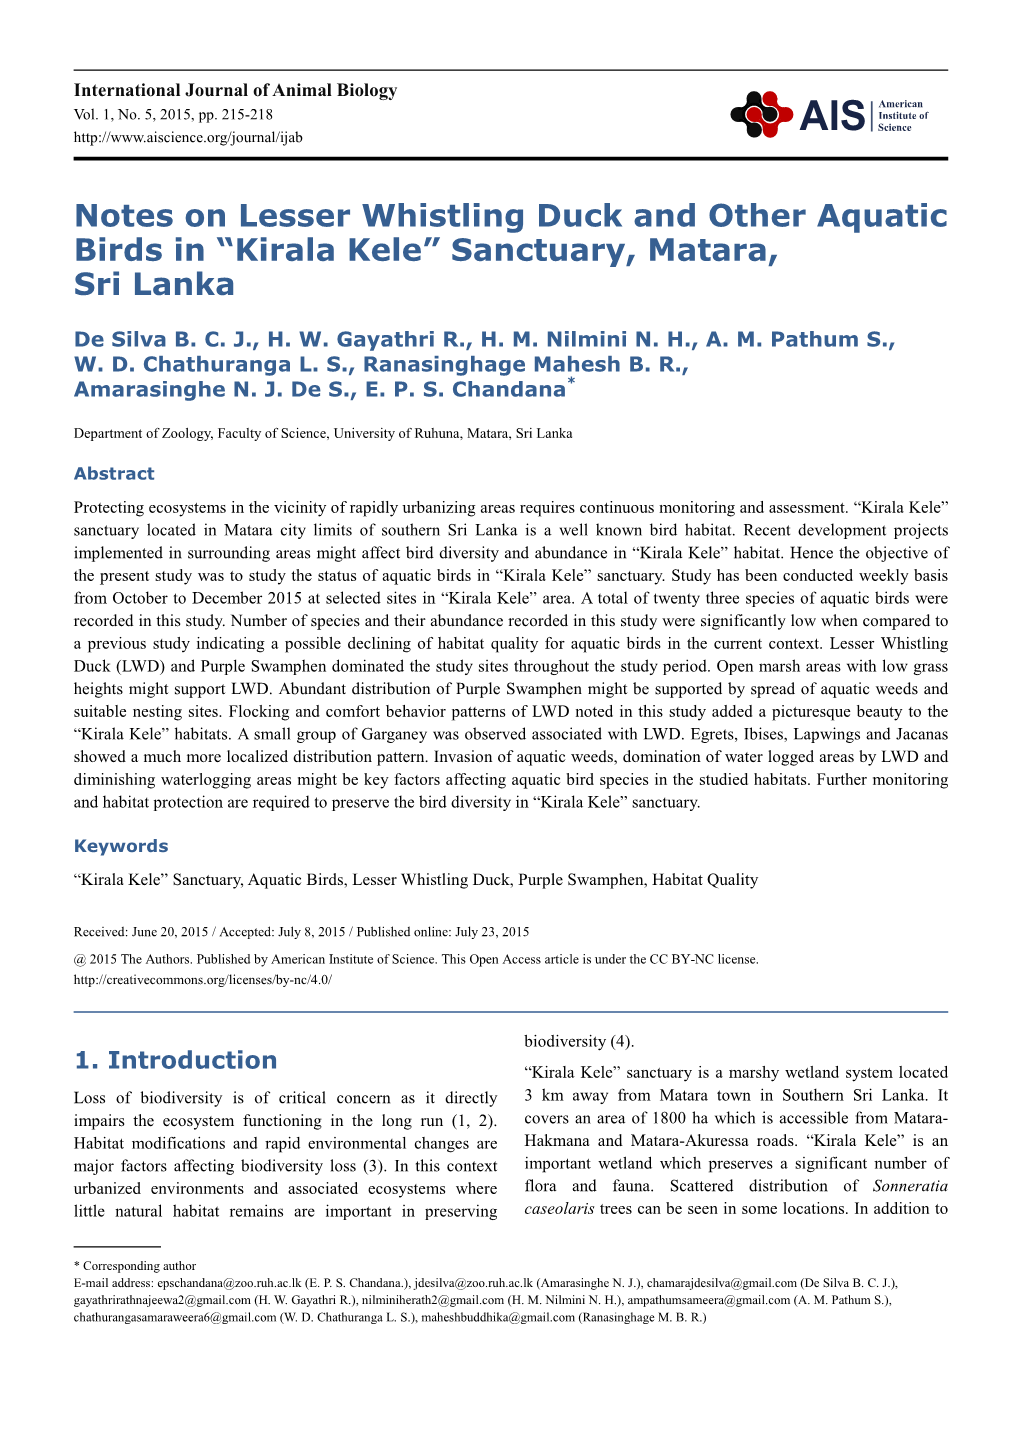 Notes on Lesser Whistling Duck and Other Aquatic Birds in “Kirala Kele” Sanctuary, Matara, Sri Lanka